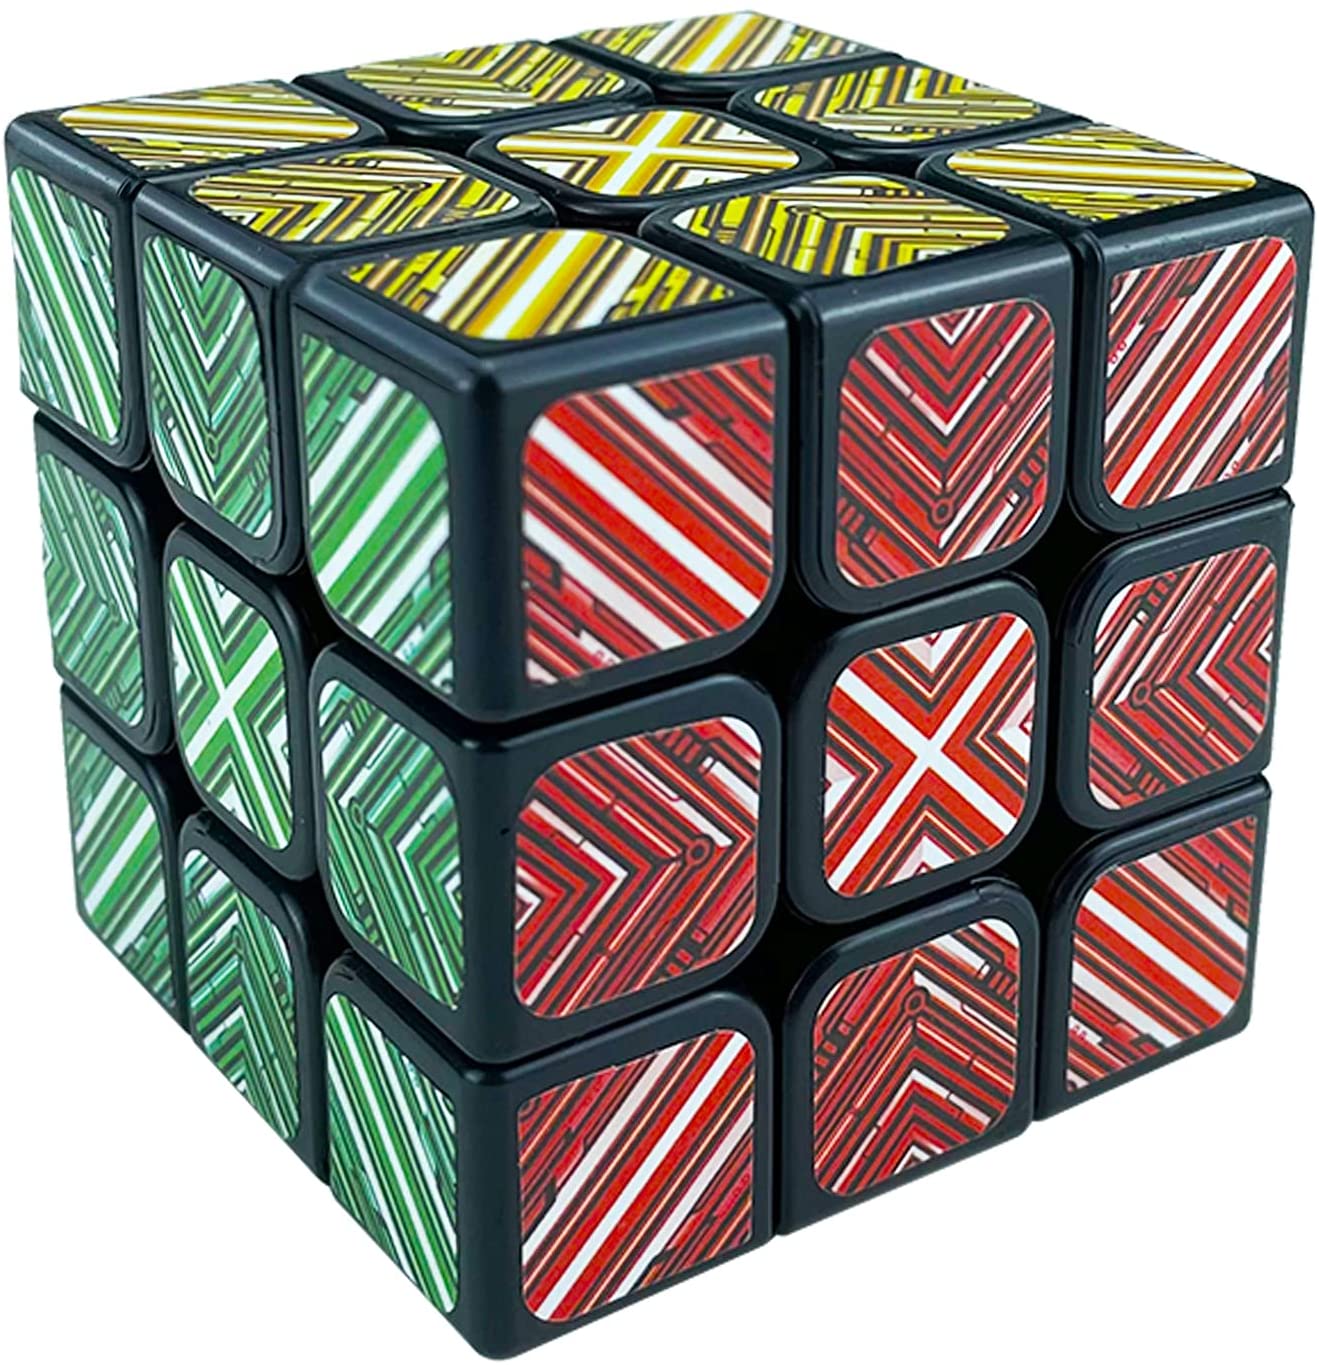 3x3 Rubics Cube Game Sudoku Puzzle Toy Children Kids Brain Teaser Rubiks Rubix 